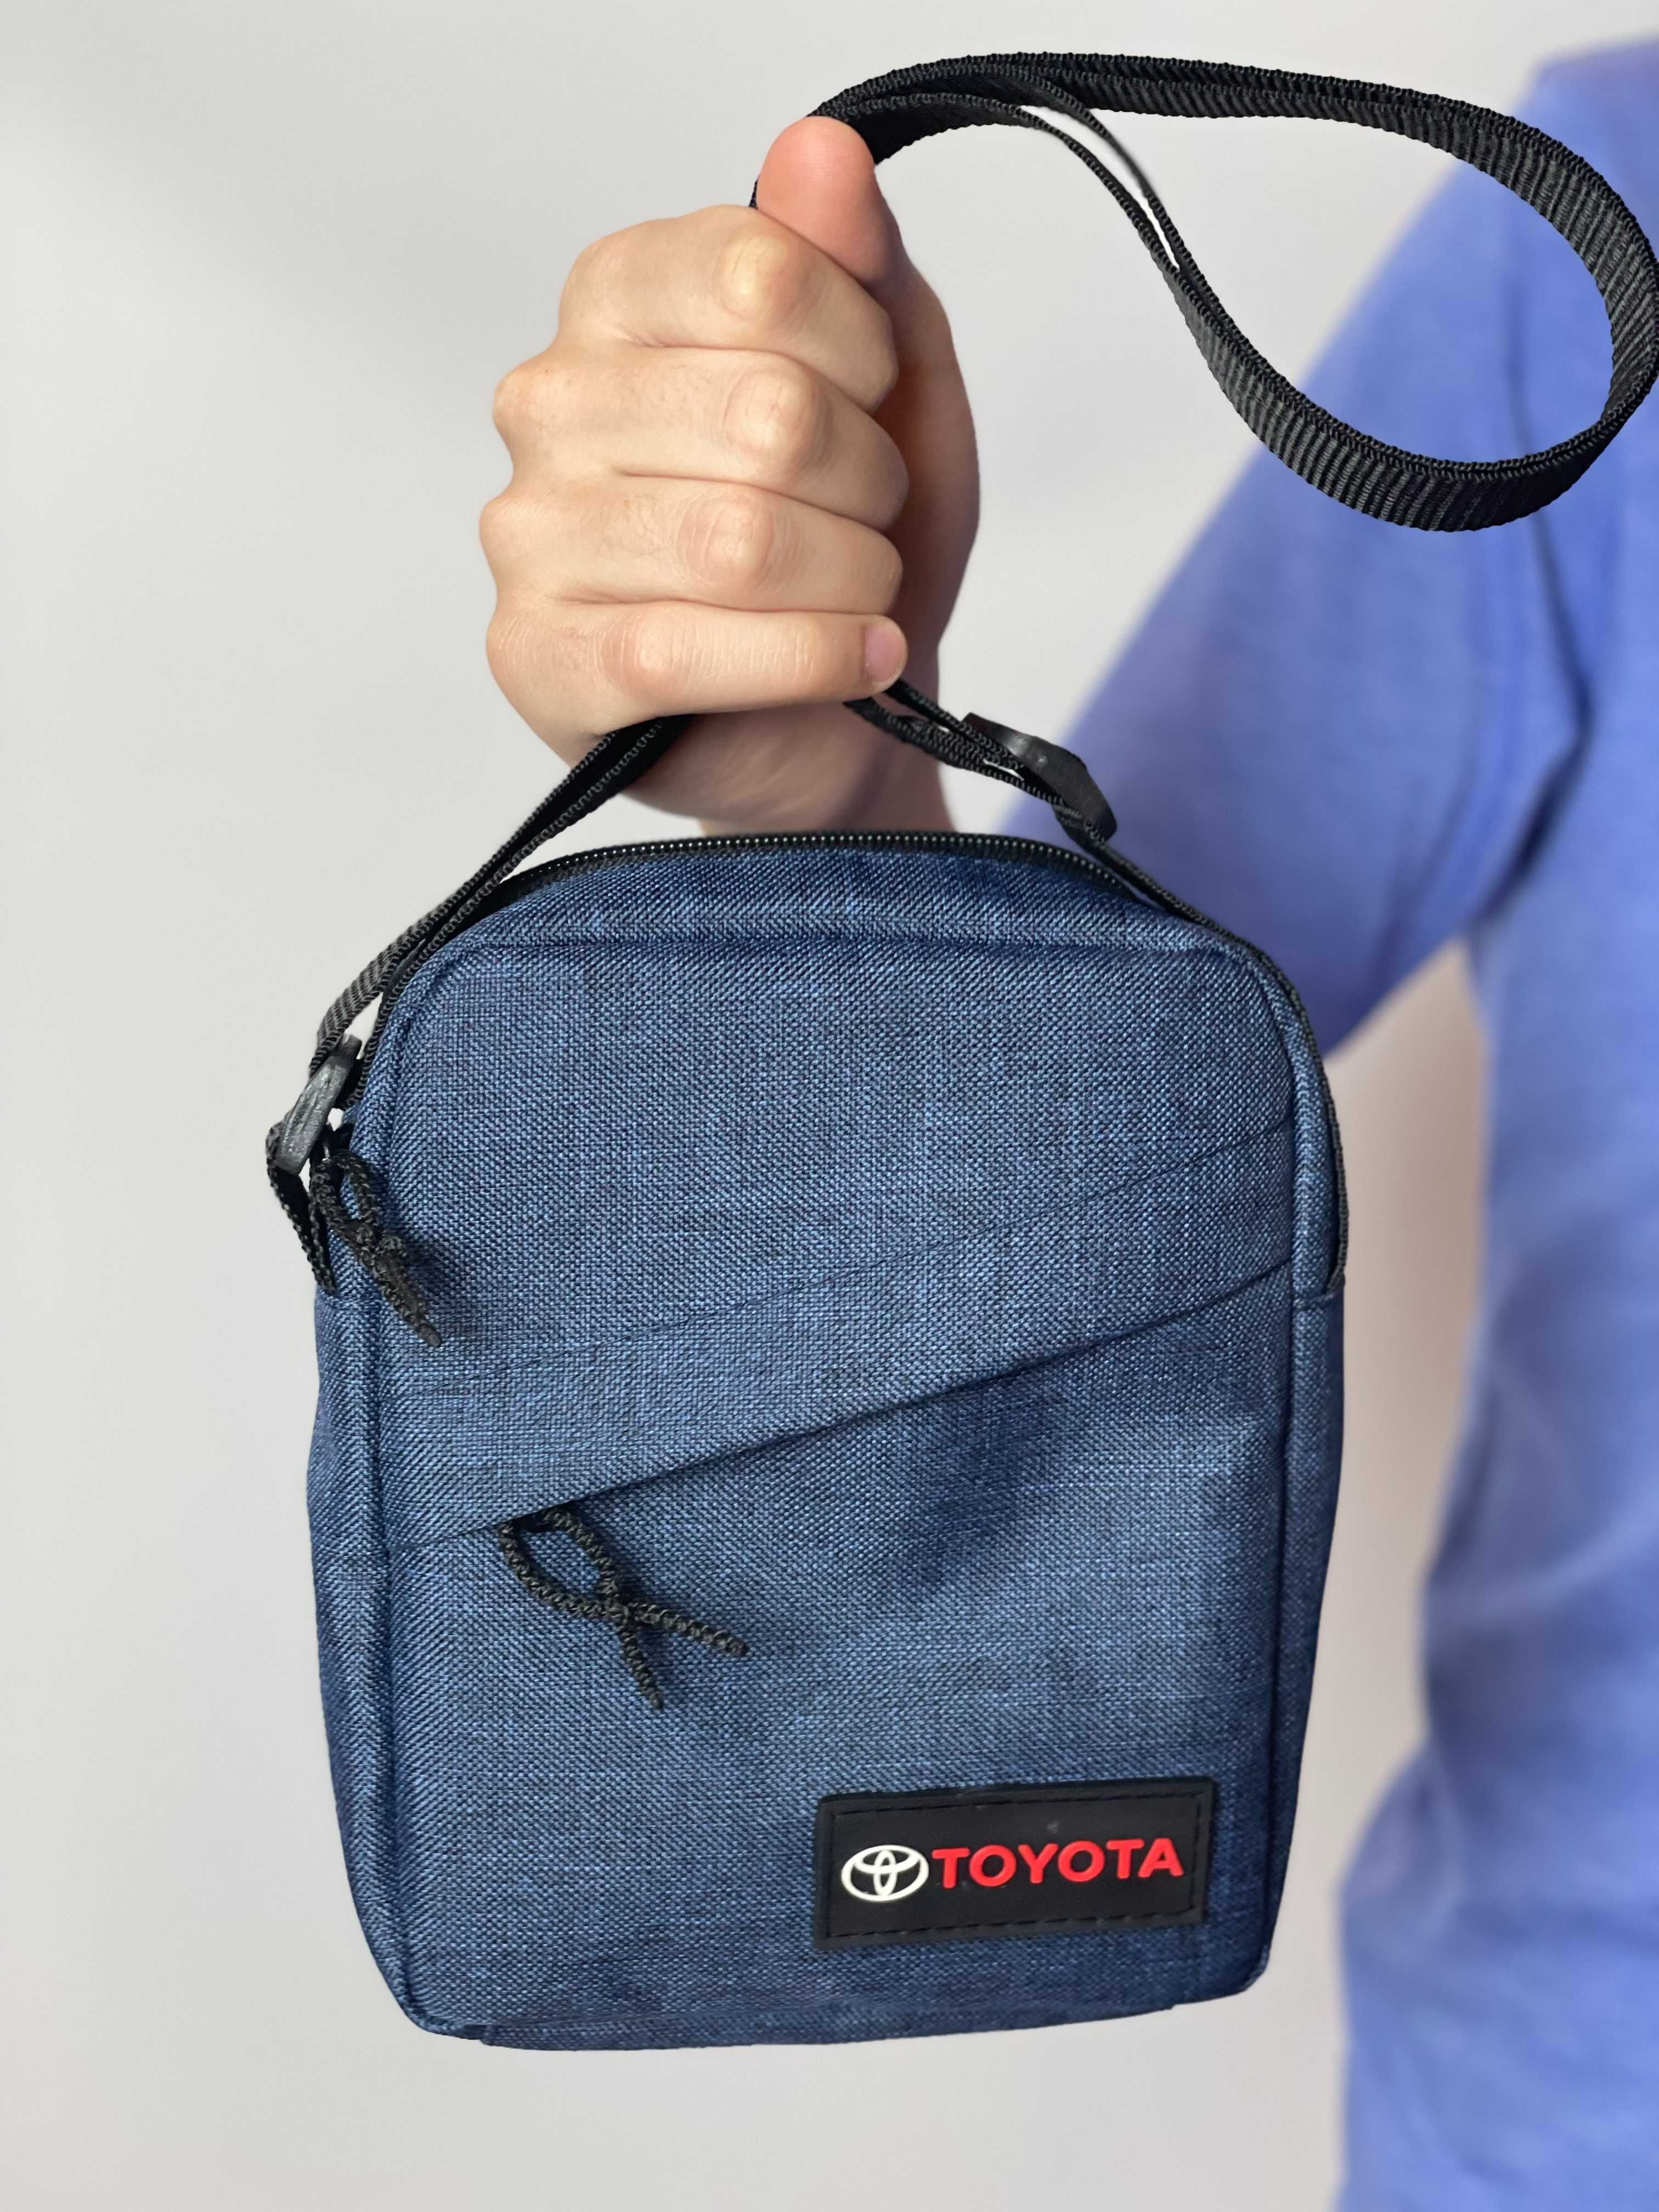 Мужской мессенджер Toyota через плечо | Синяя тканевая сумка Тойота